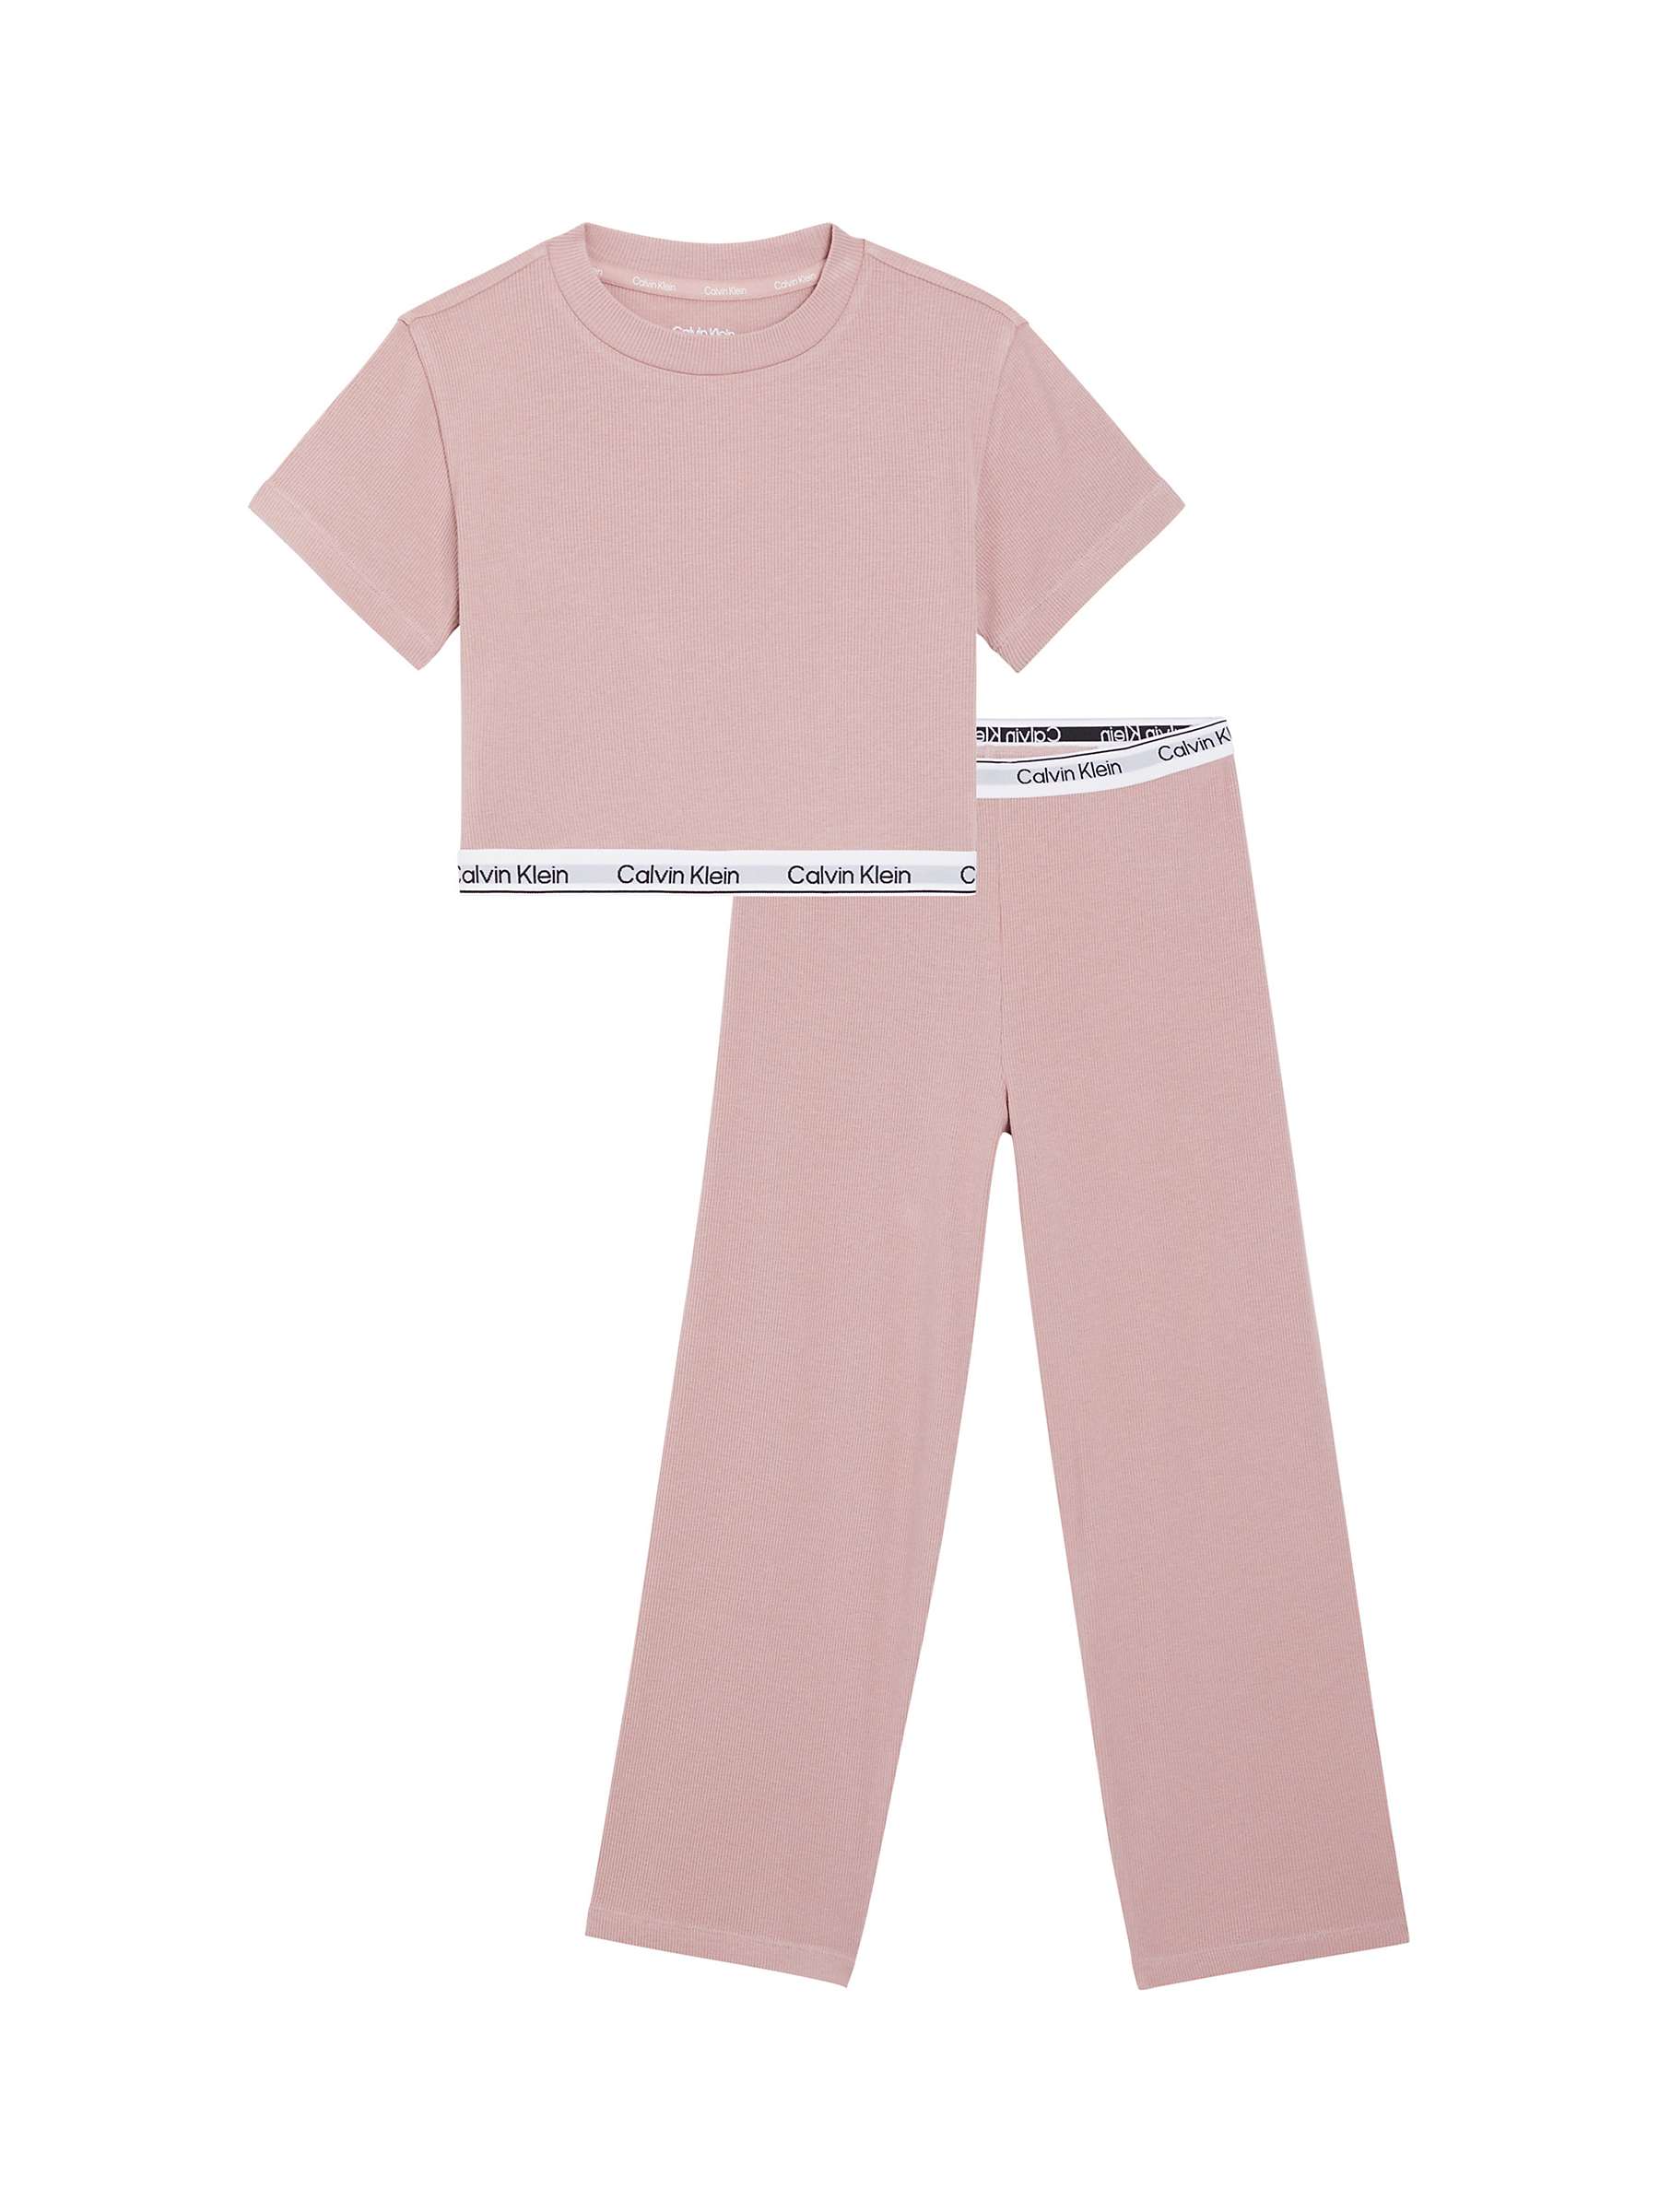 Buy Calvin Klein CK Slogan Band Pyjama Set, Velvet Pink Online at johnlewis.com